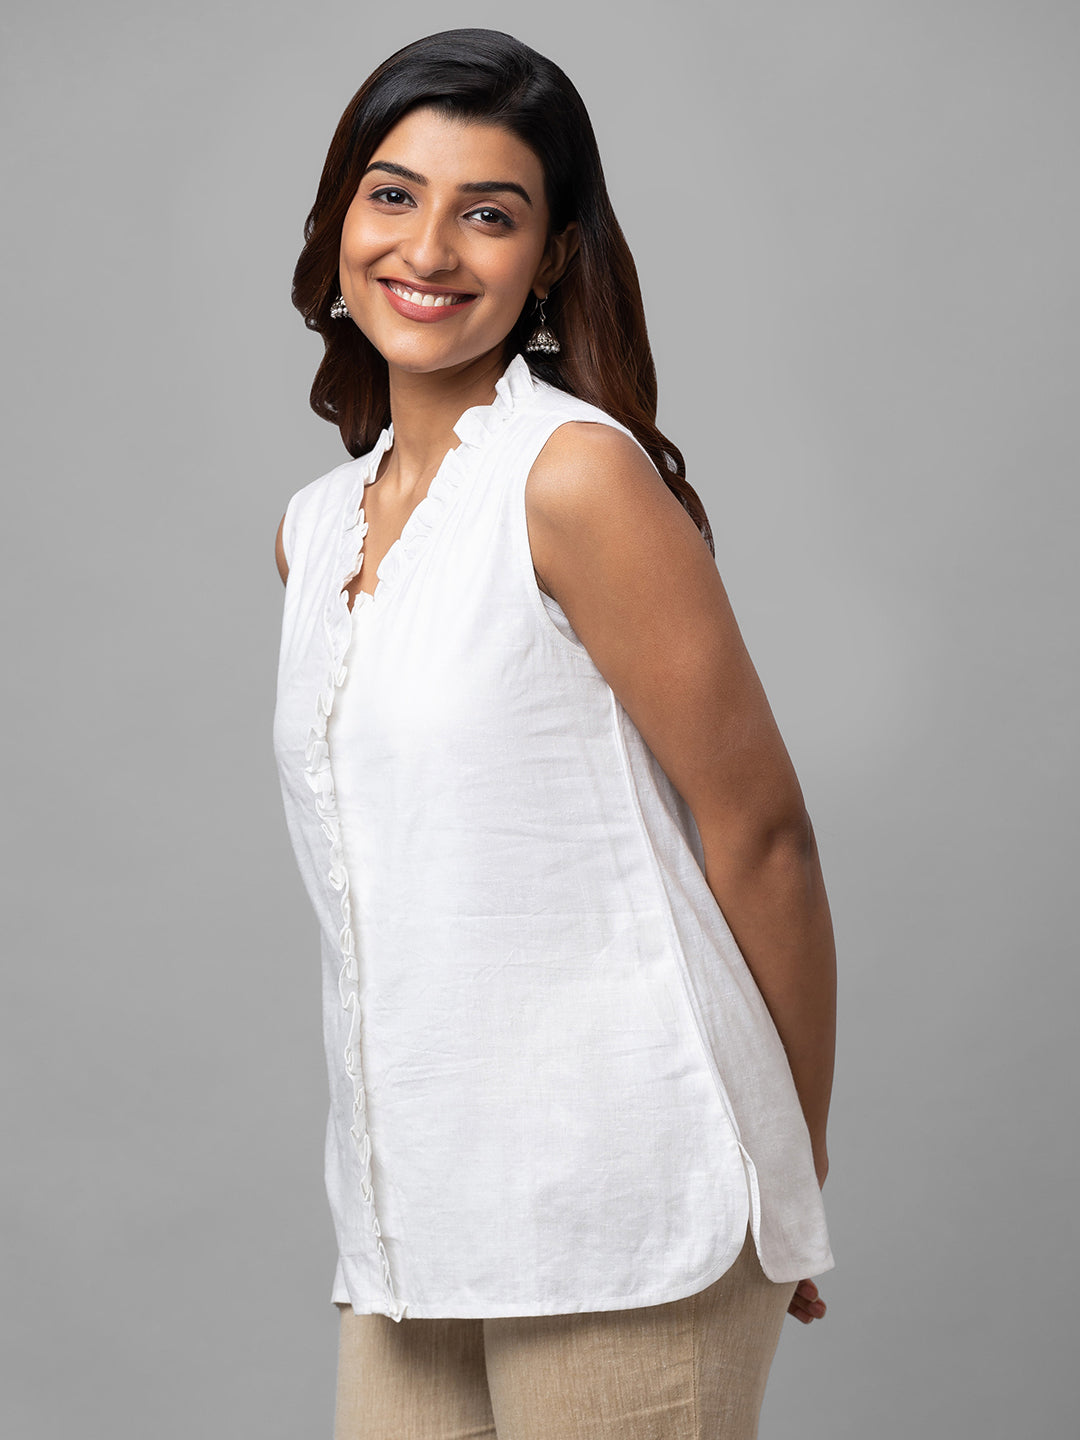 BN Khaadi Cotton Top~ Short Kurti Kameez Women - Size 14 | eBay